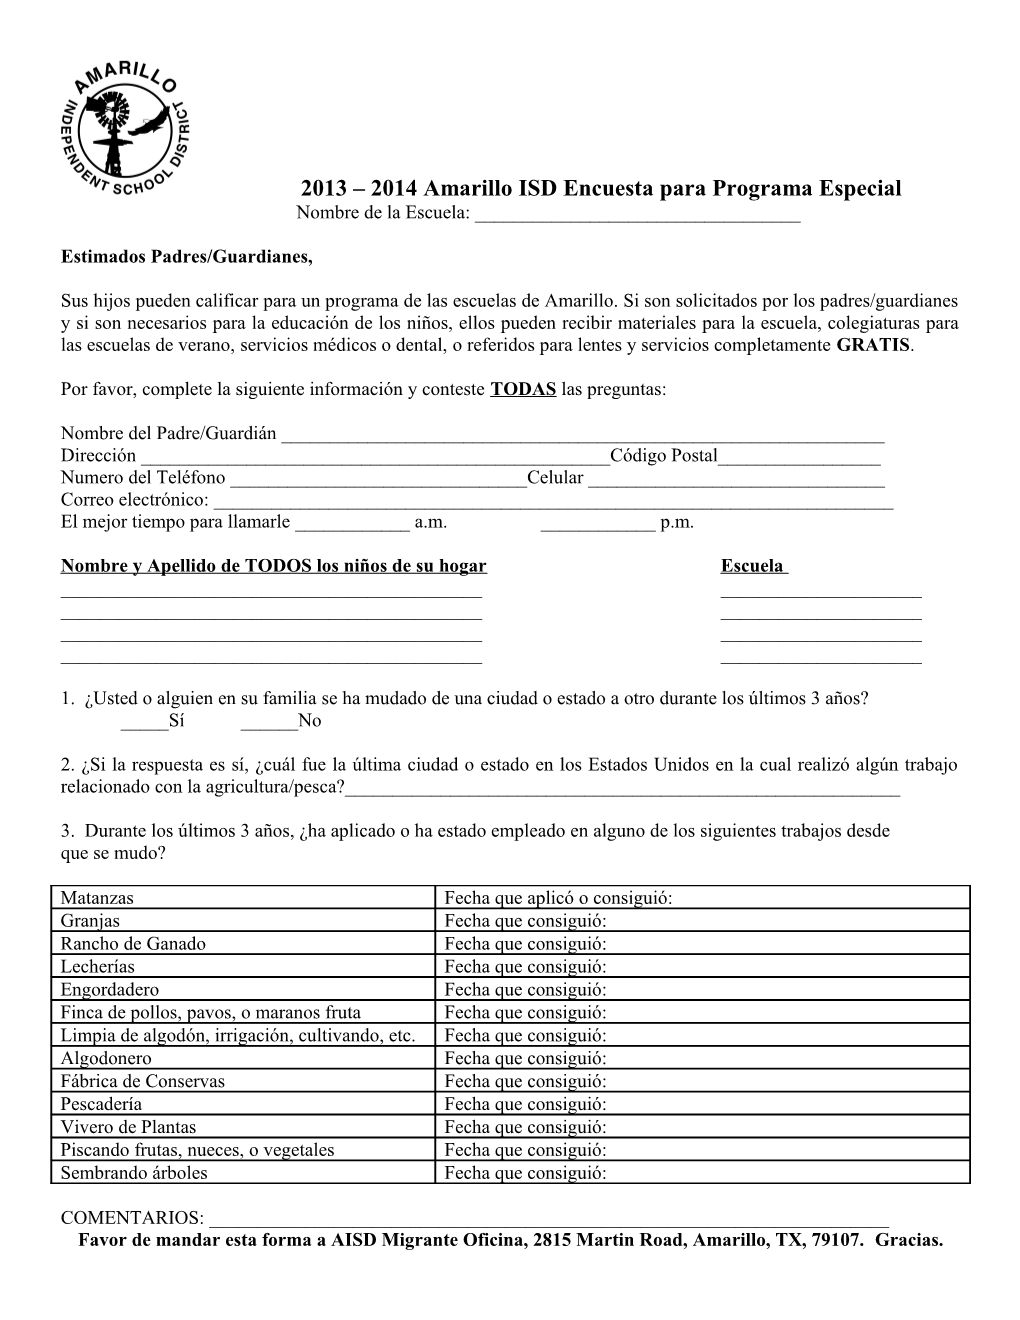 2013 2014 Amarillo ISD Special Program Survey